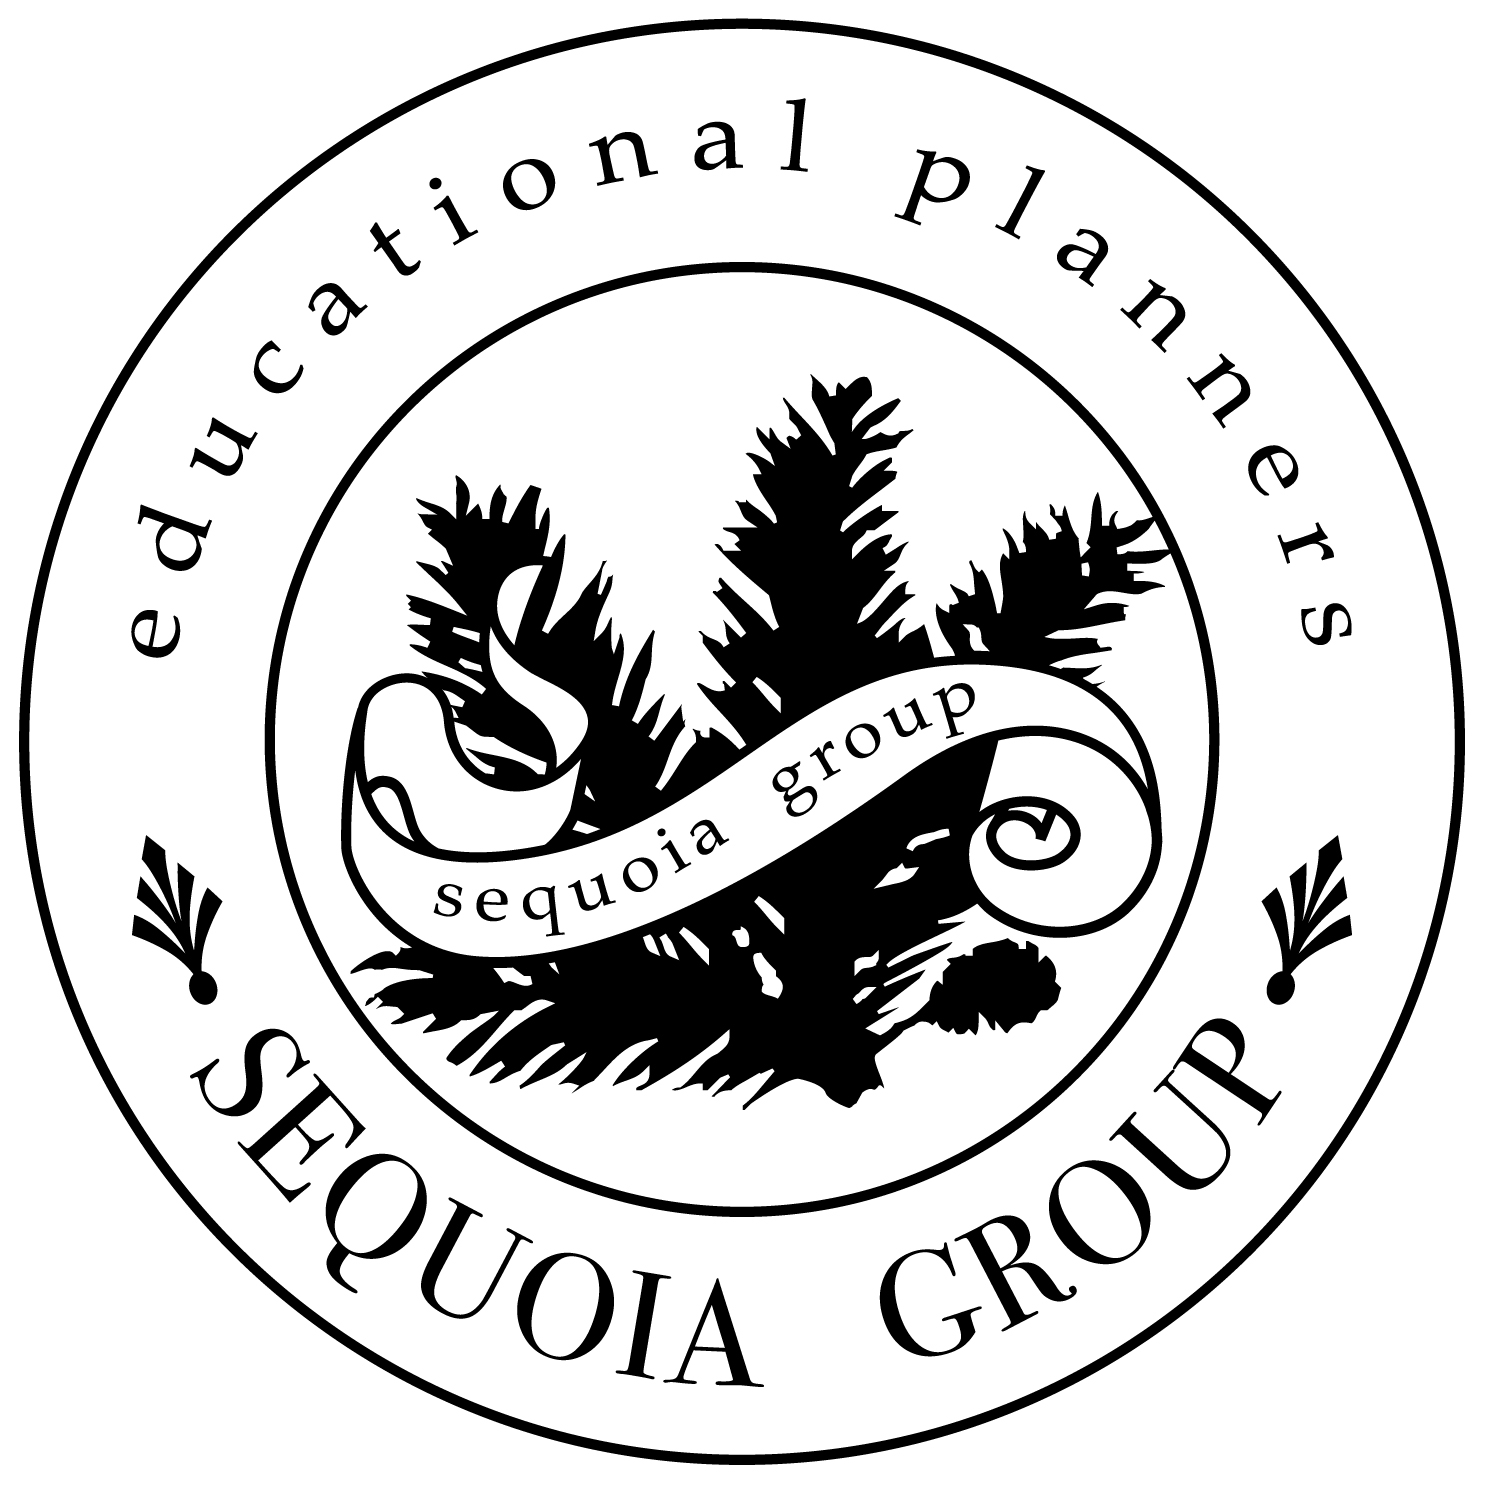 Sequoia Group